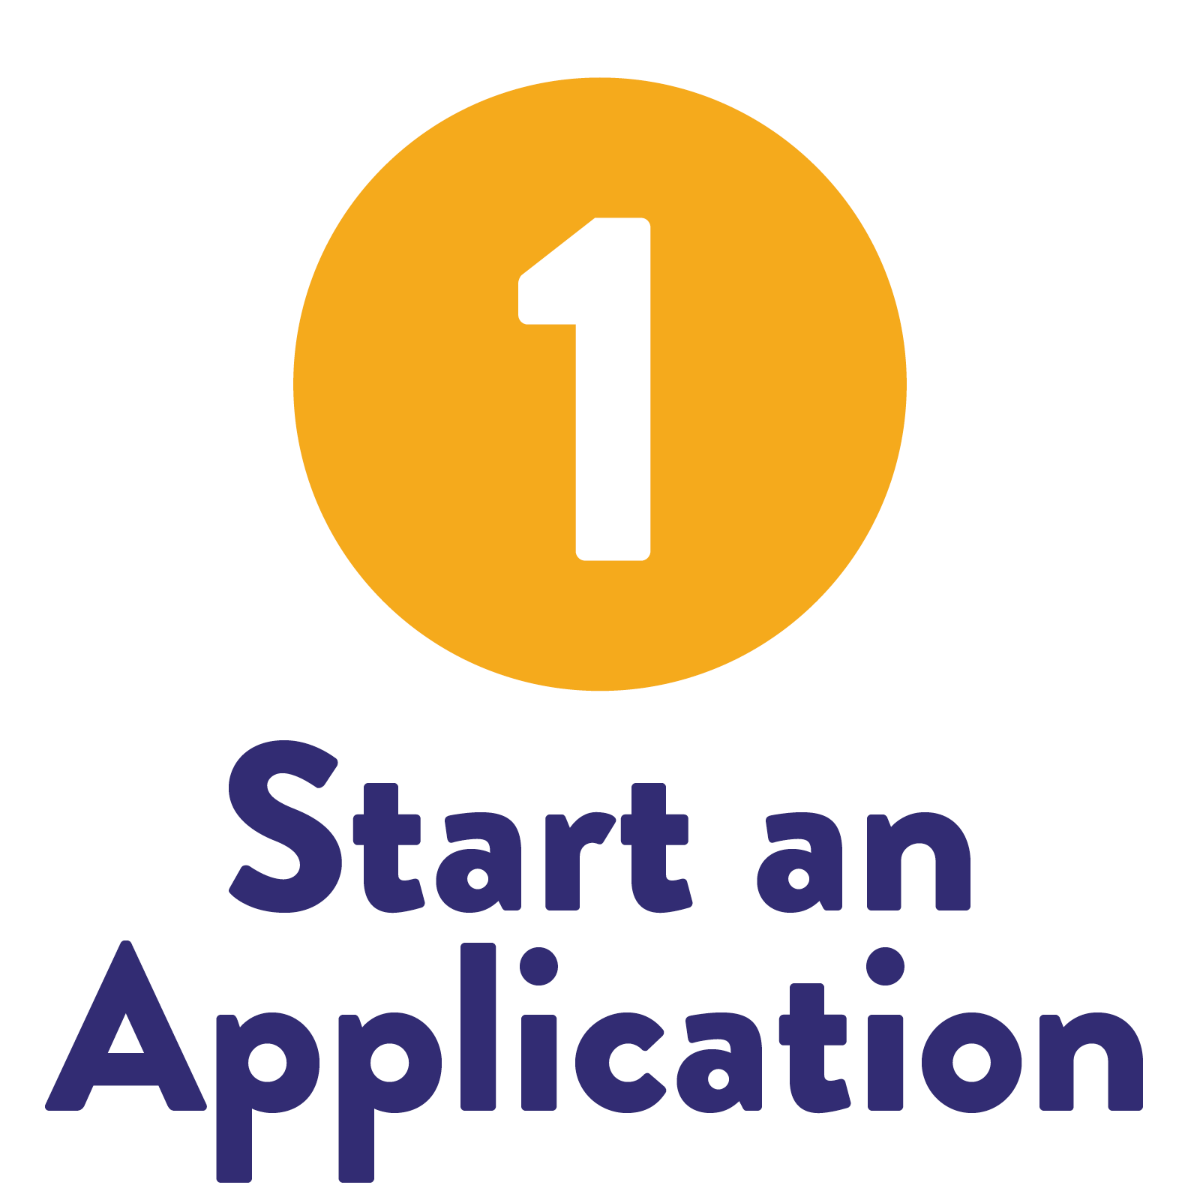 Start Application